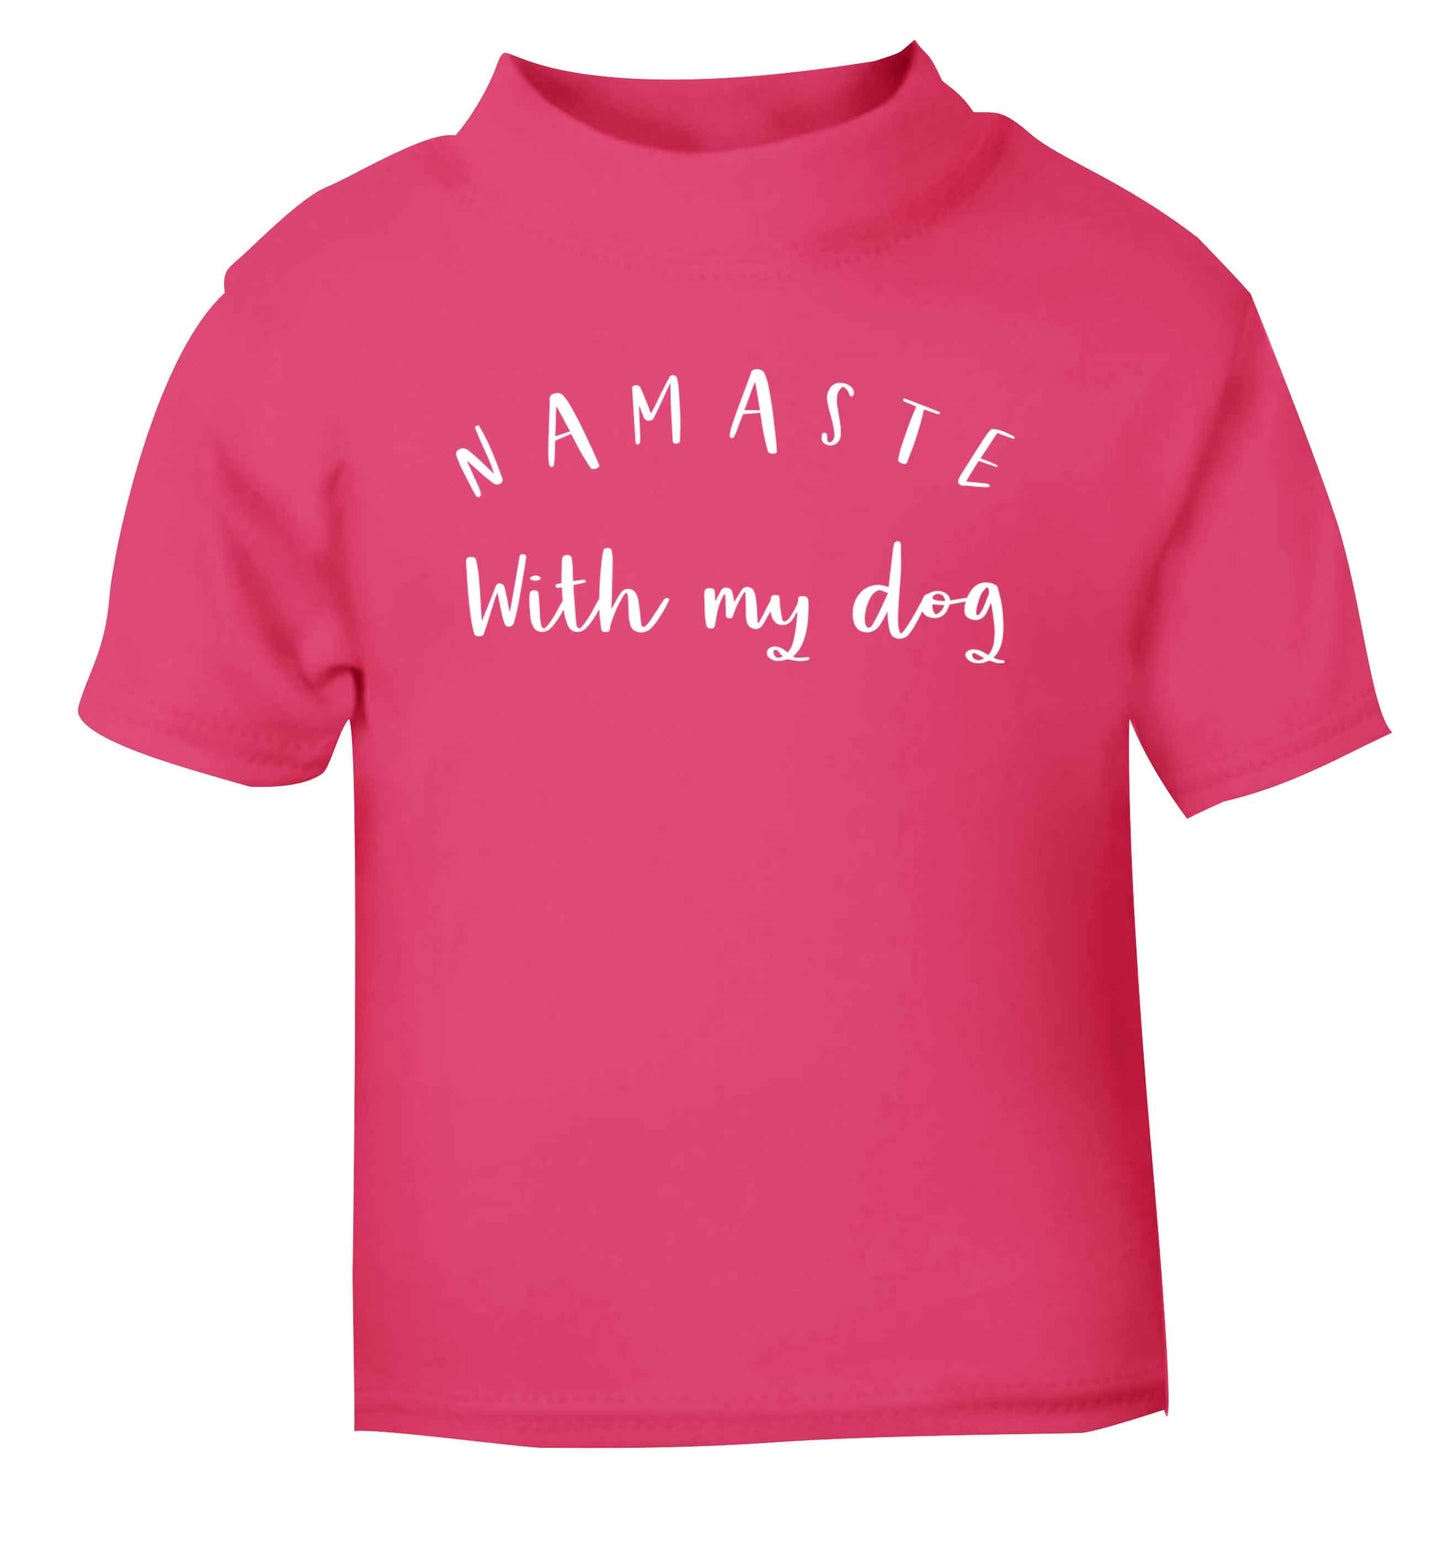 Namaste with my dog pink Baby Toddler Tshirt 2 Years